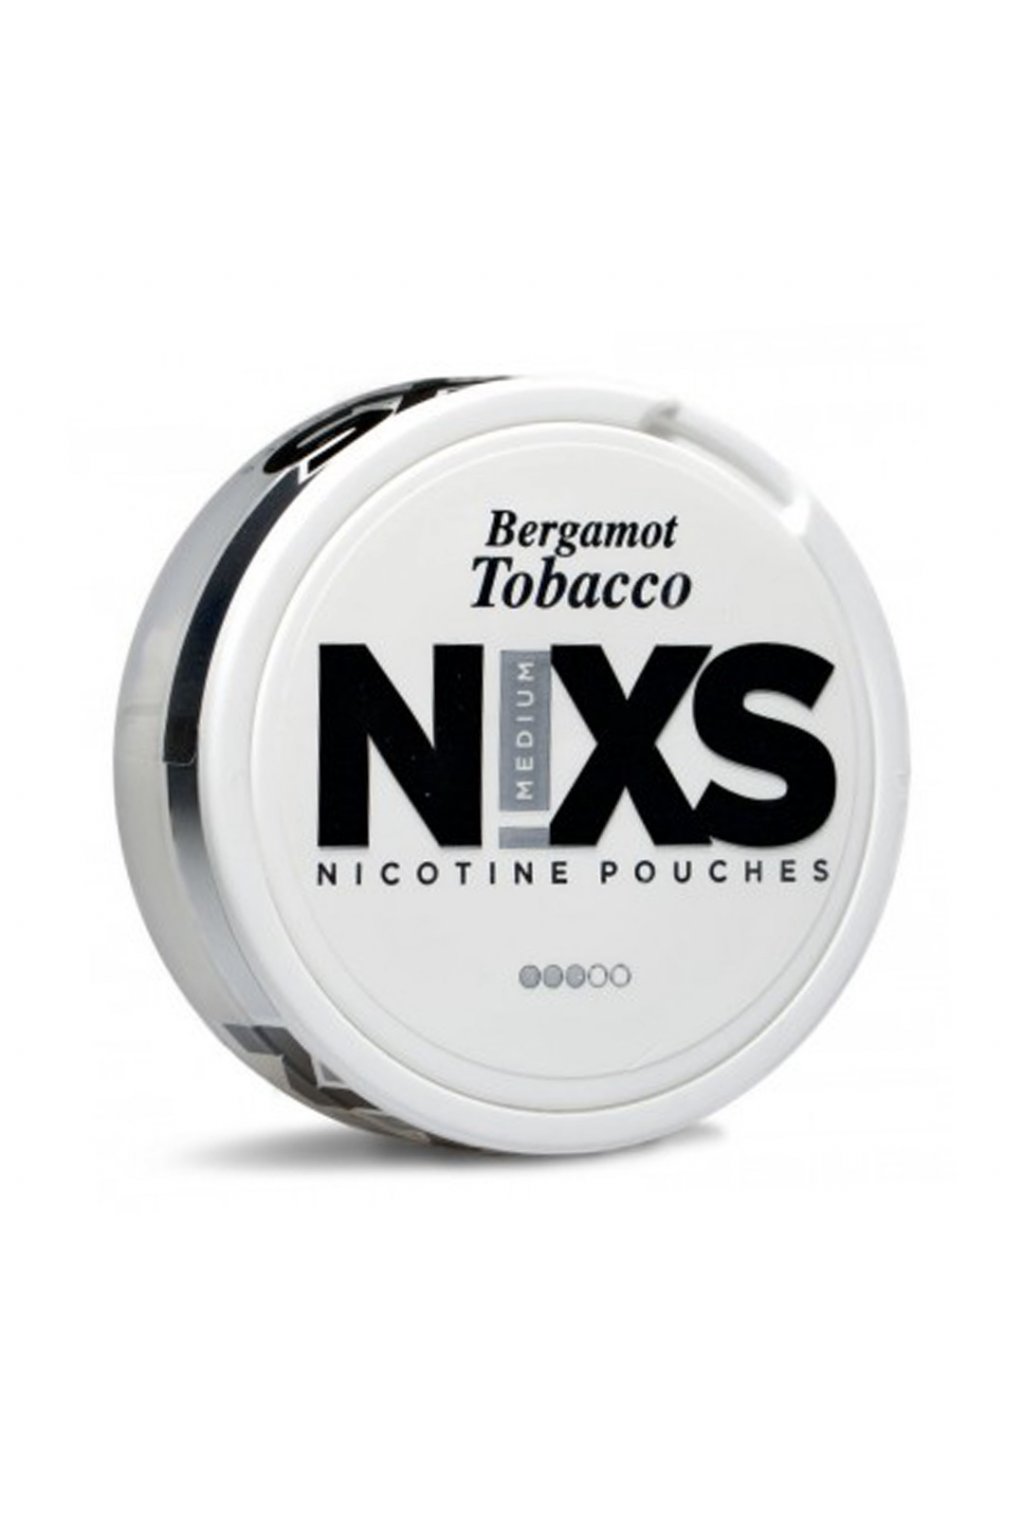 nixs bergamot tobacco nikotinove sacky nicopods